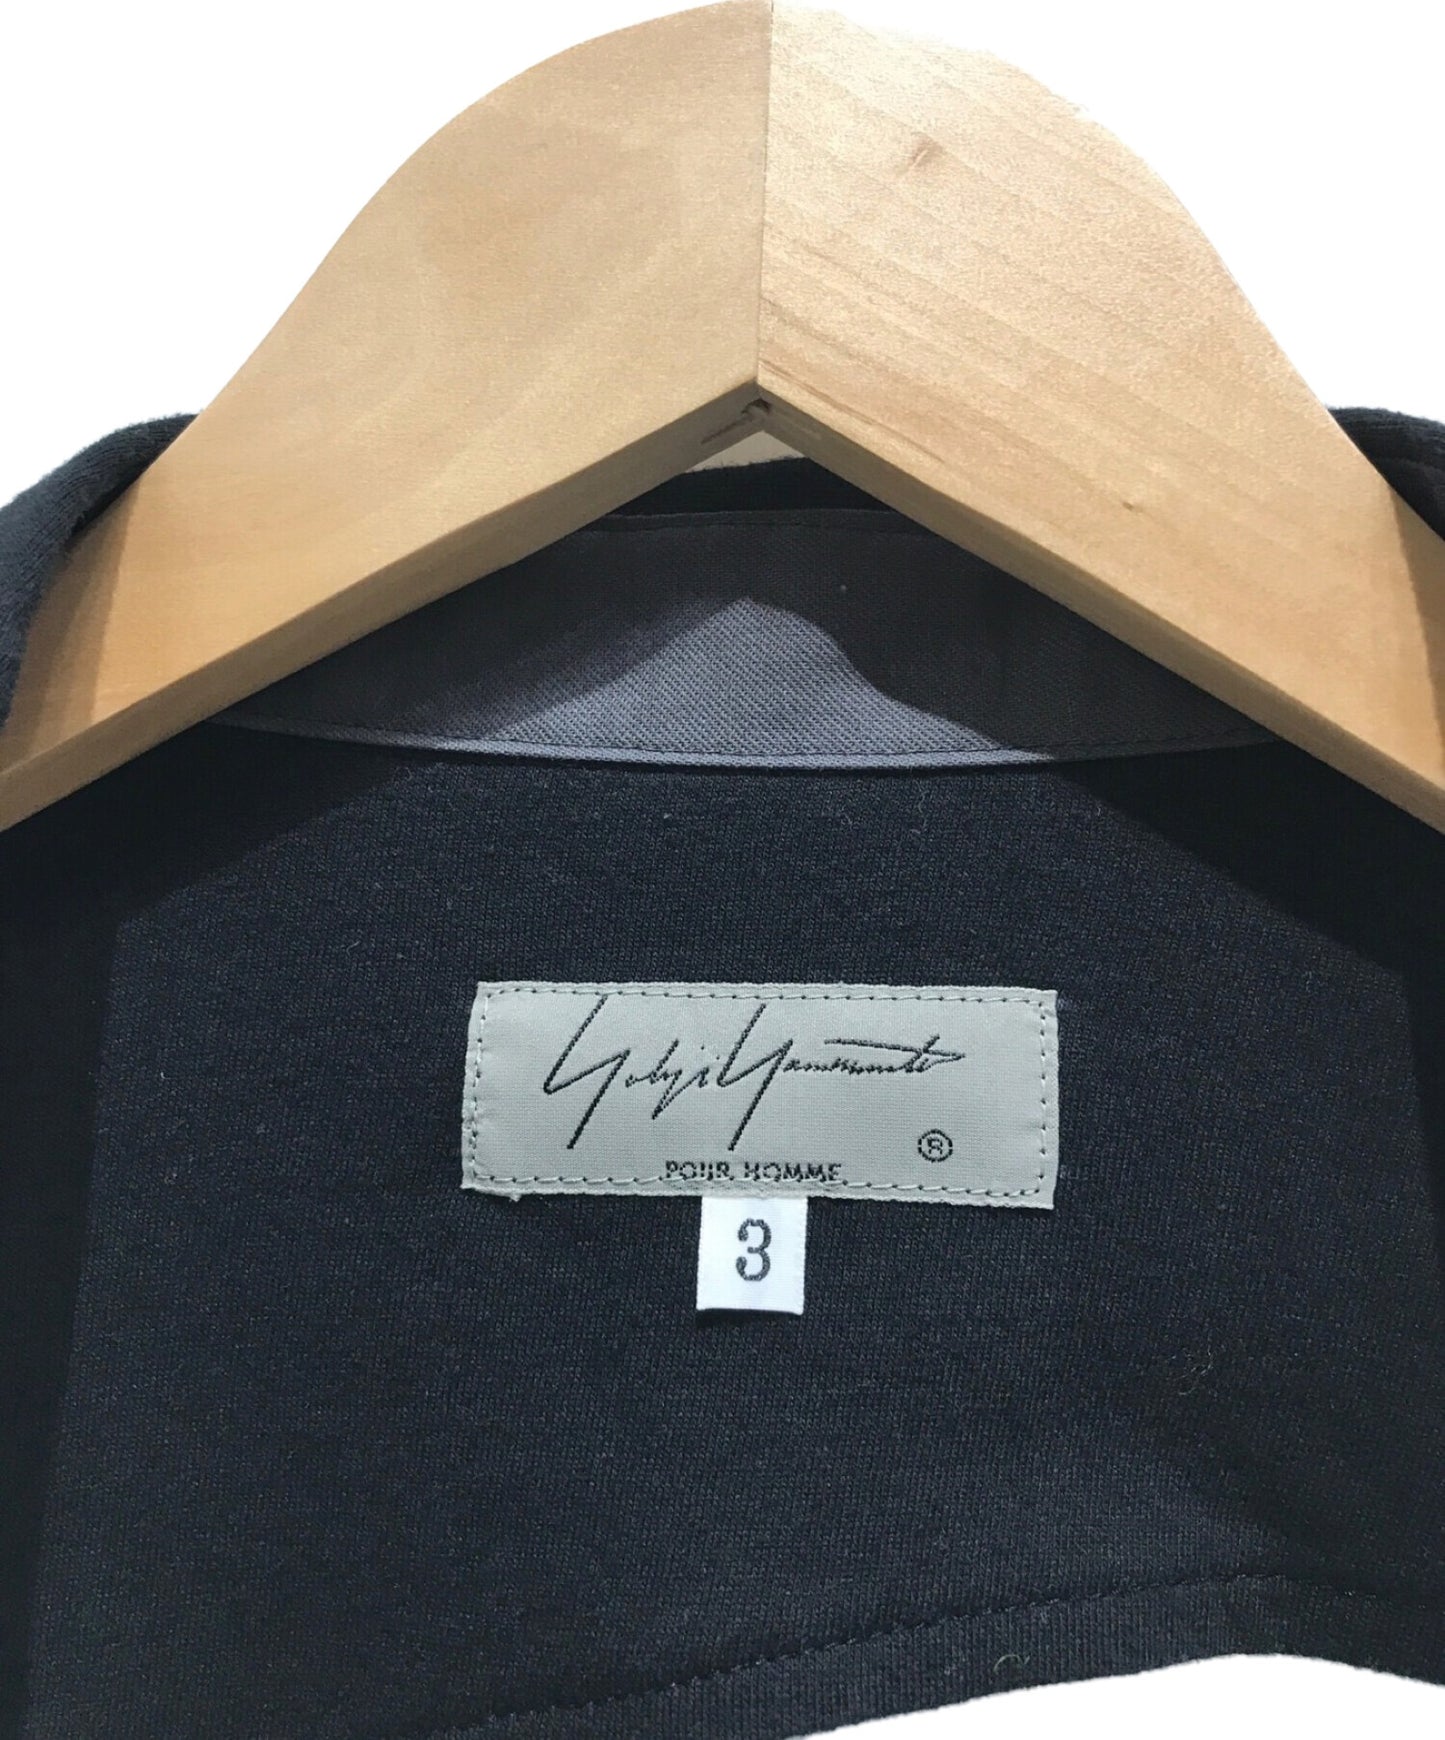 Yohji Yamamoto Pour Homme × Yuka Asakura Switch Switch ด้านหน้าภาพประกอบเสื้อแขนยาววาด HC-B36-818